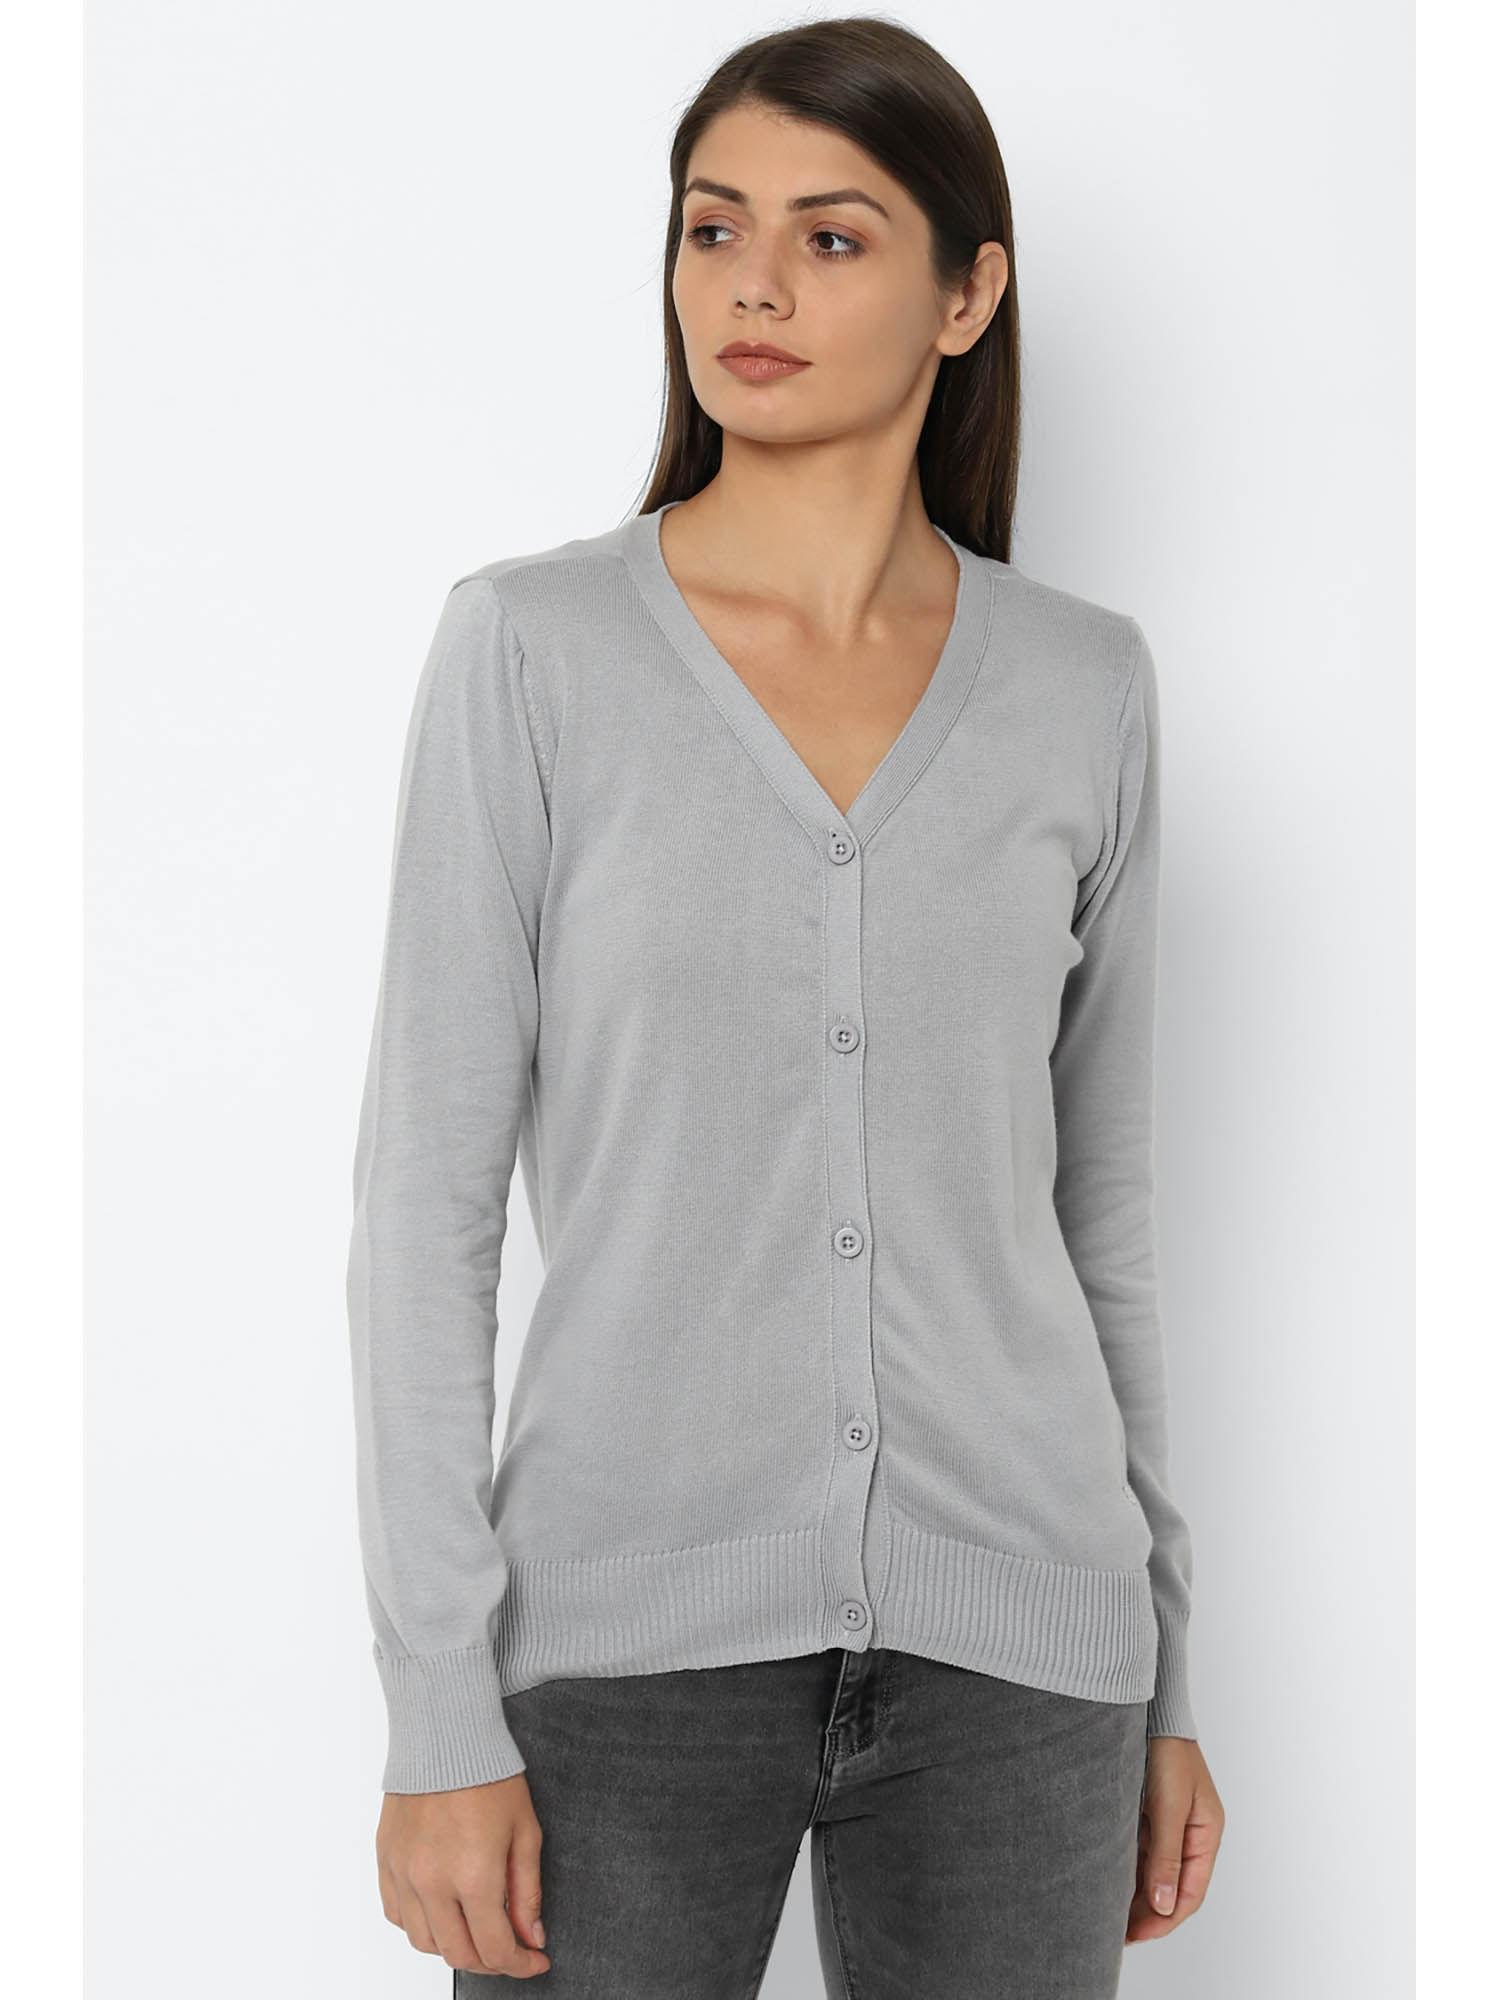 women-grey-solid-v-neck-casual-cardigan